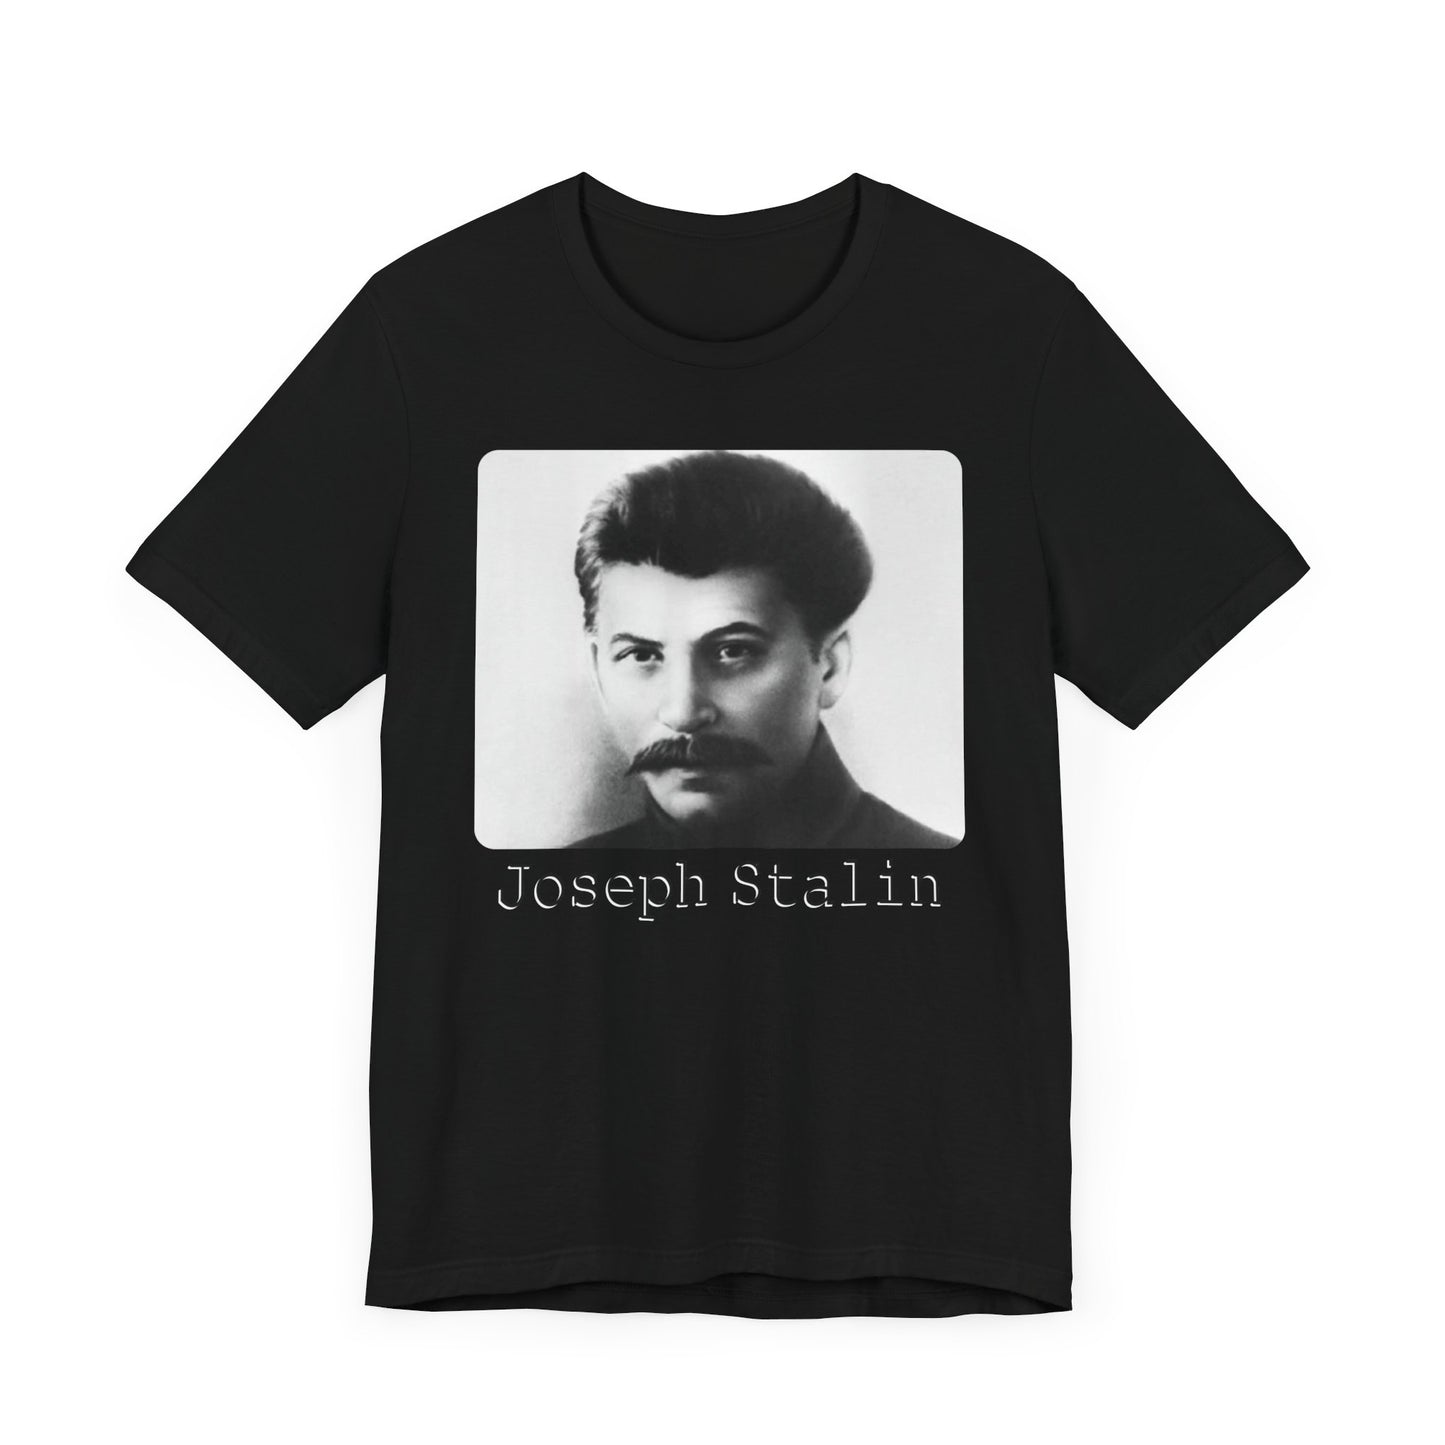 Joseph Stalin - Hemingway Line - Hurts Shirts Collection